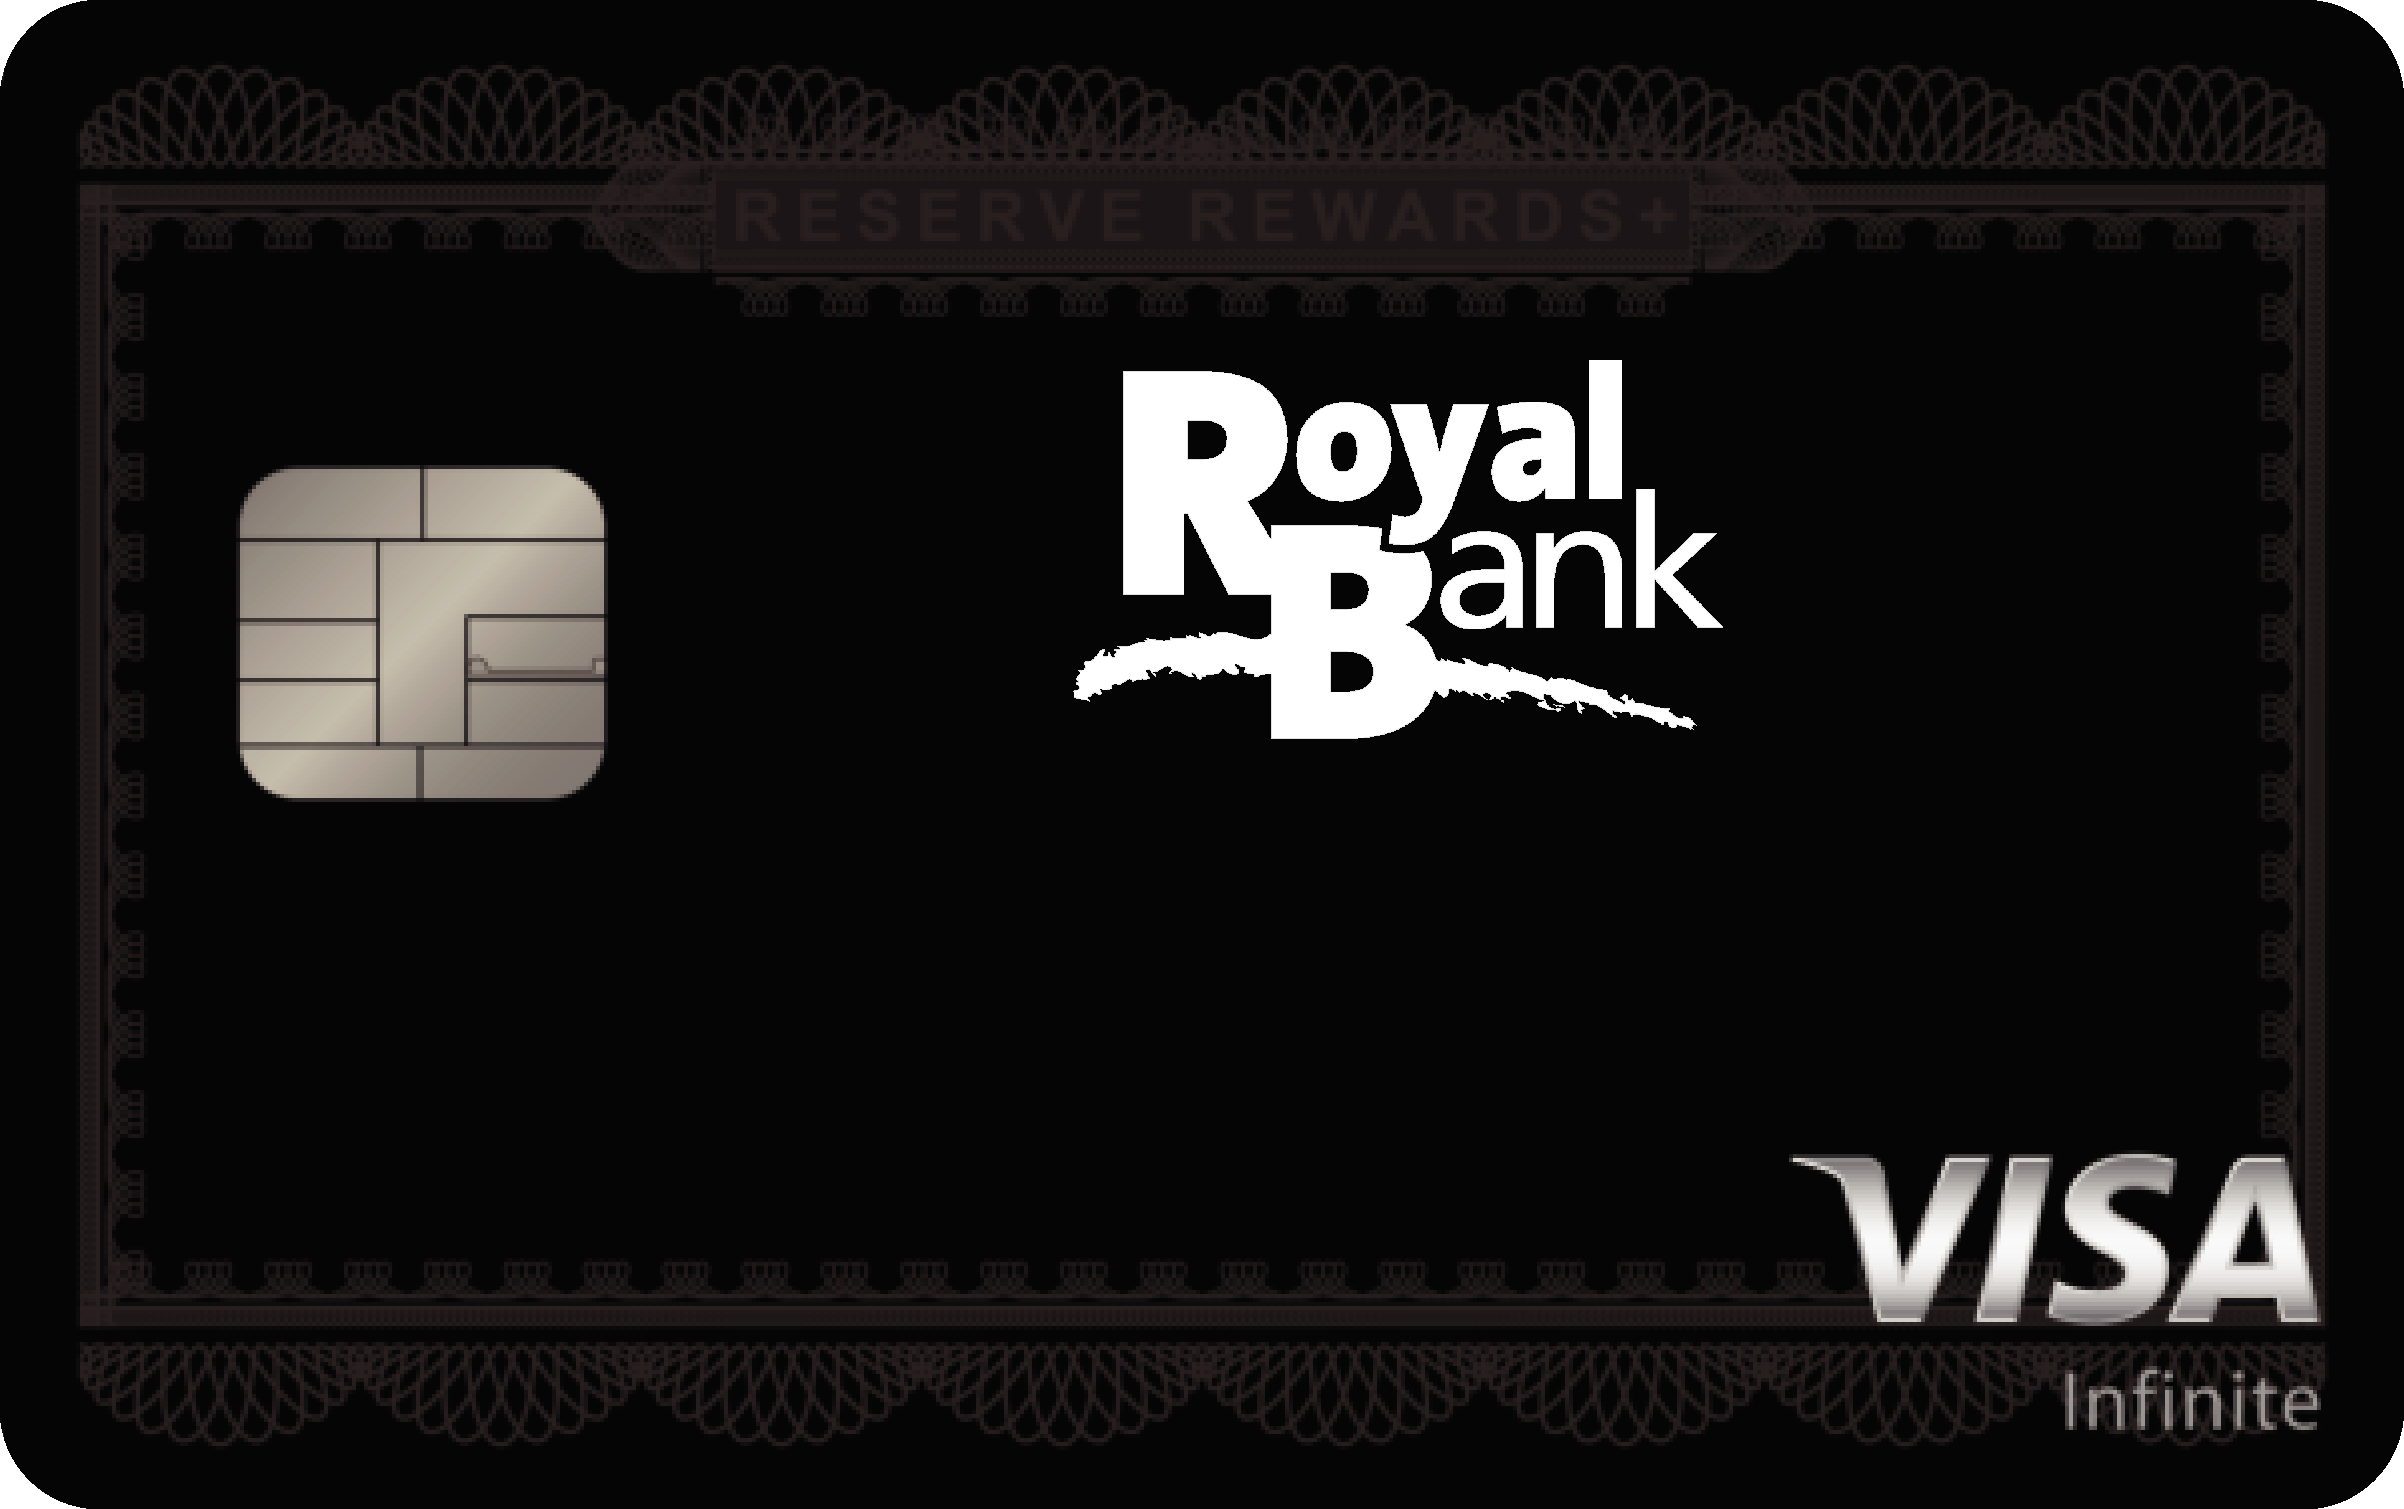 Royal Bank Reserve Rewards+ Card